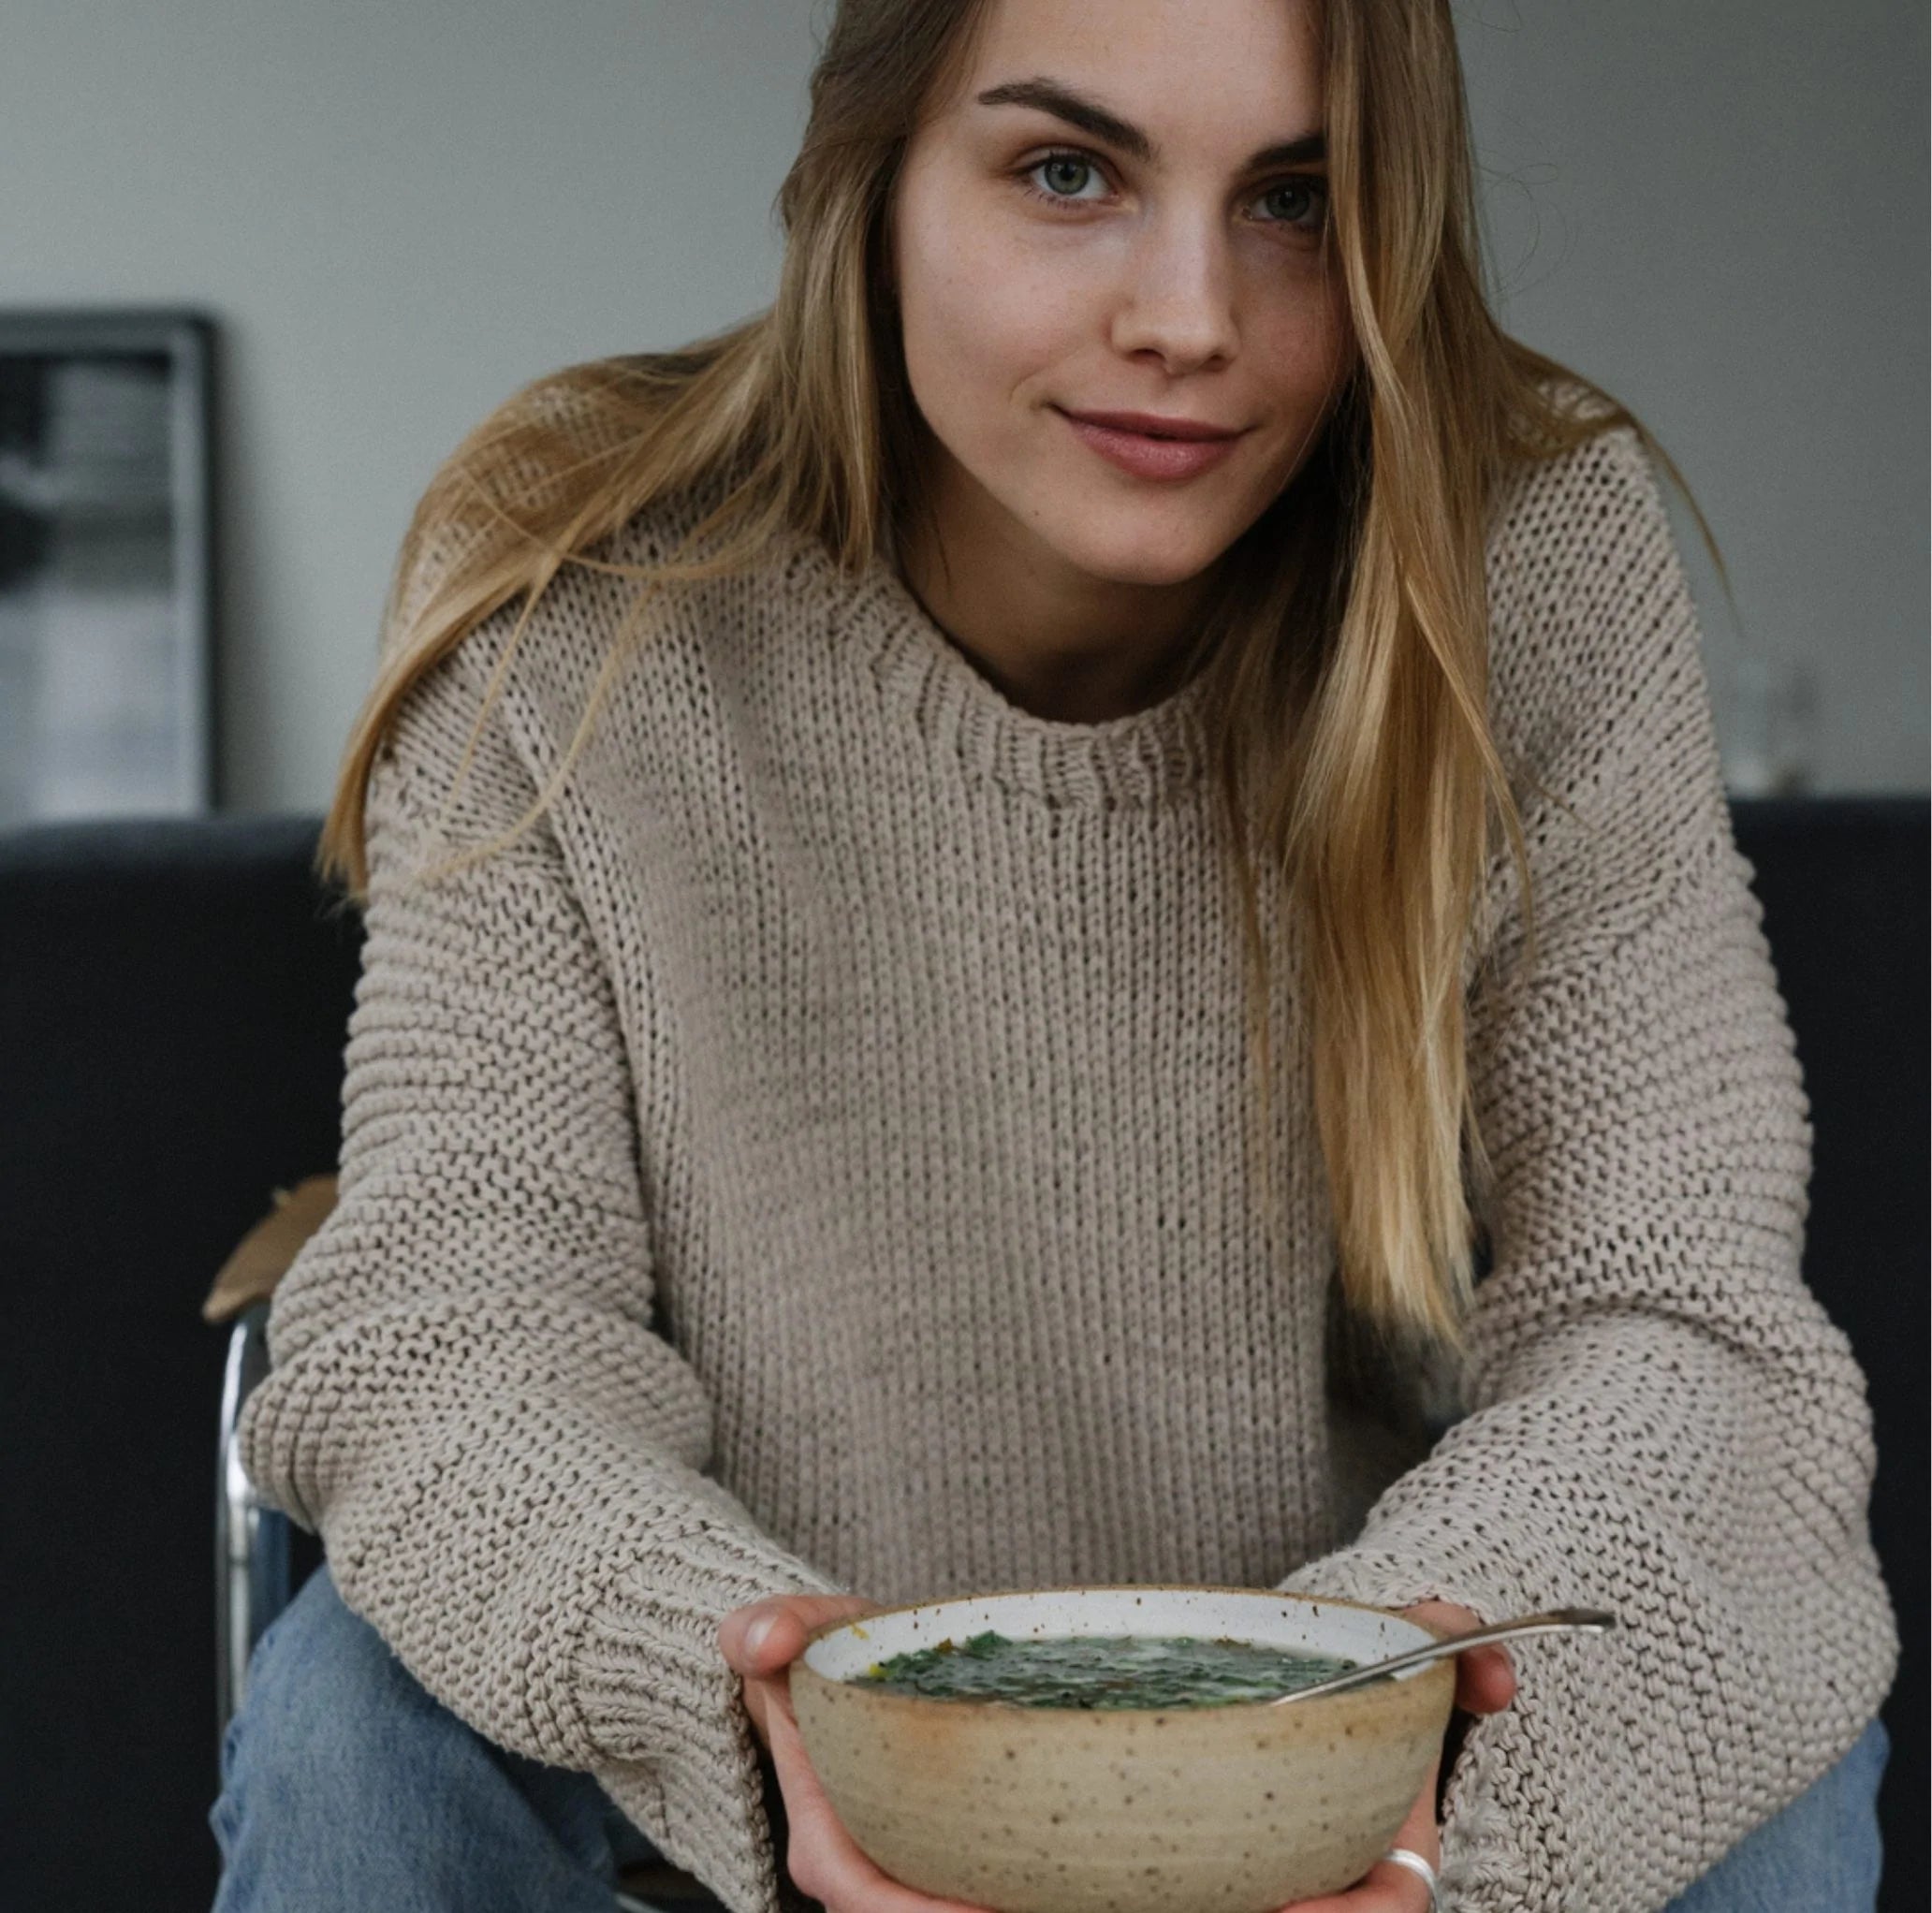 Model Julija Steponavičiūtė on discovering her heritage through Baltic cuisine